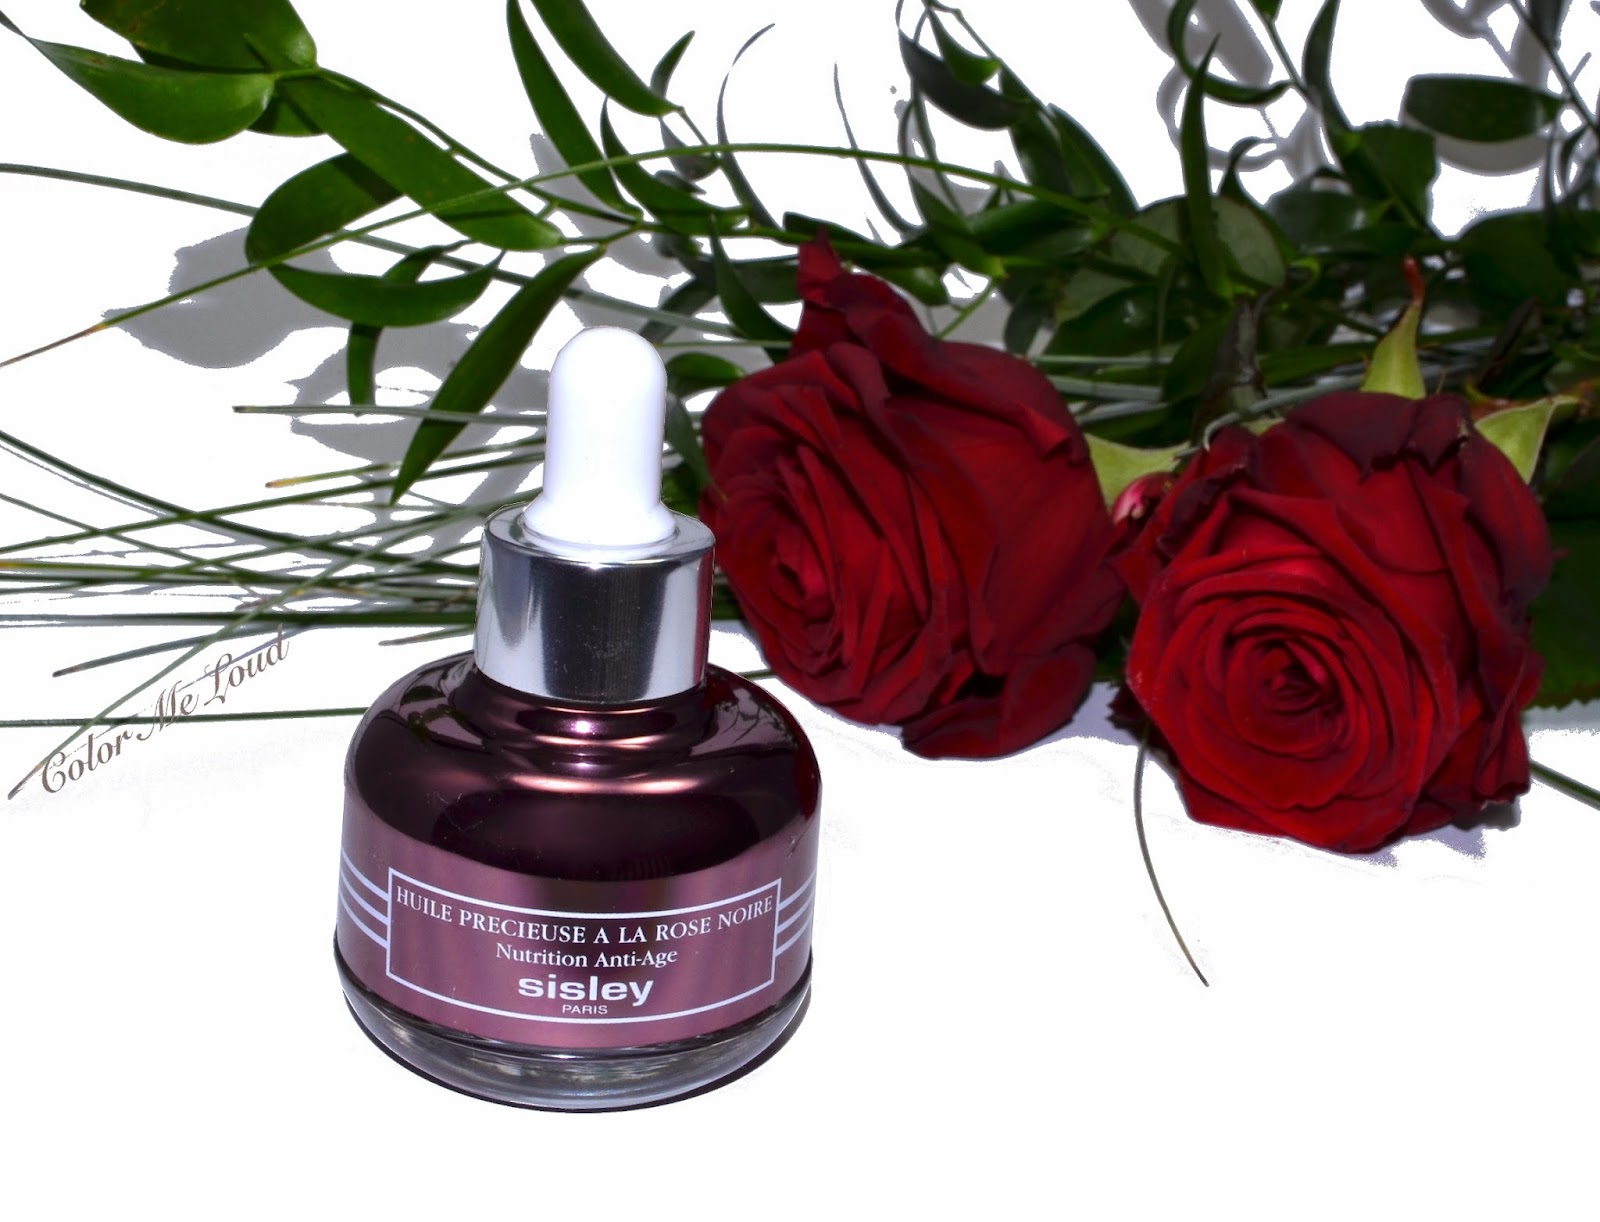 Sisley Paris Black Rose Precious Face Oil, Anti-Aging Nutrition, Review 